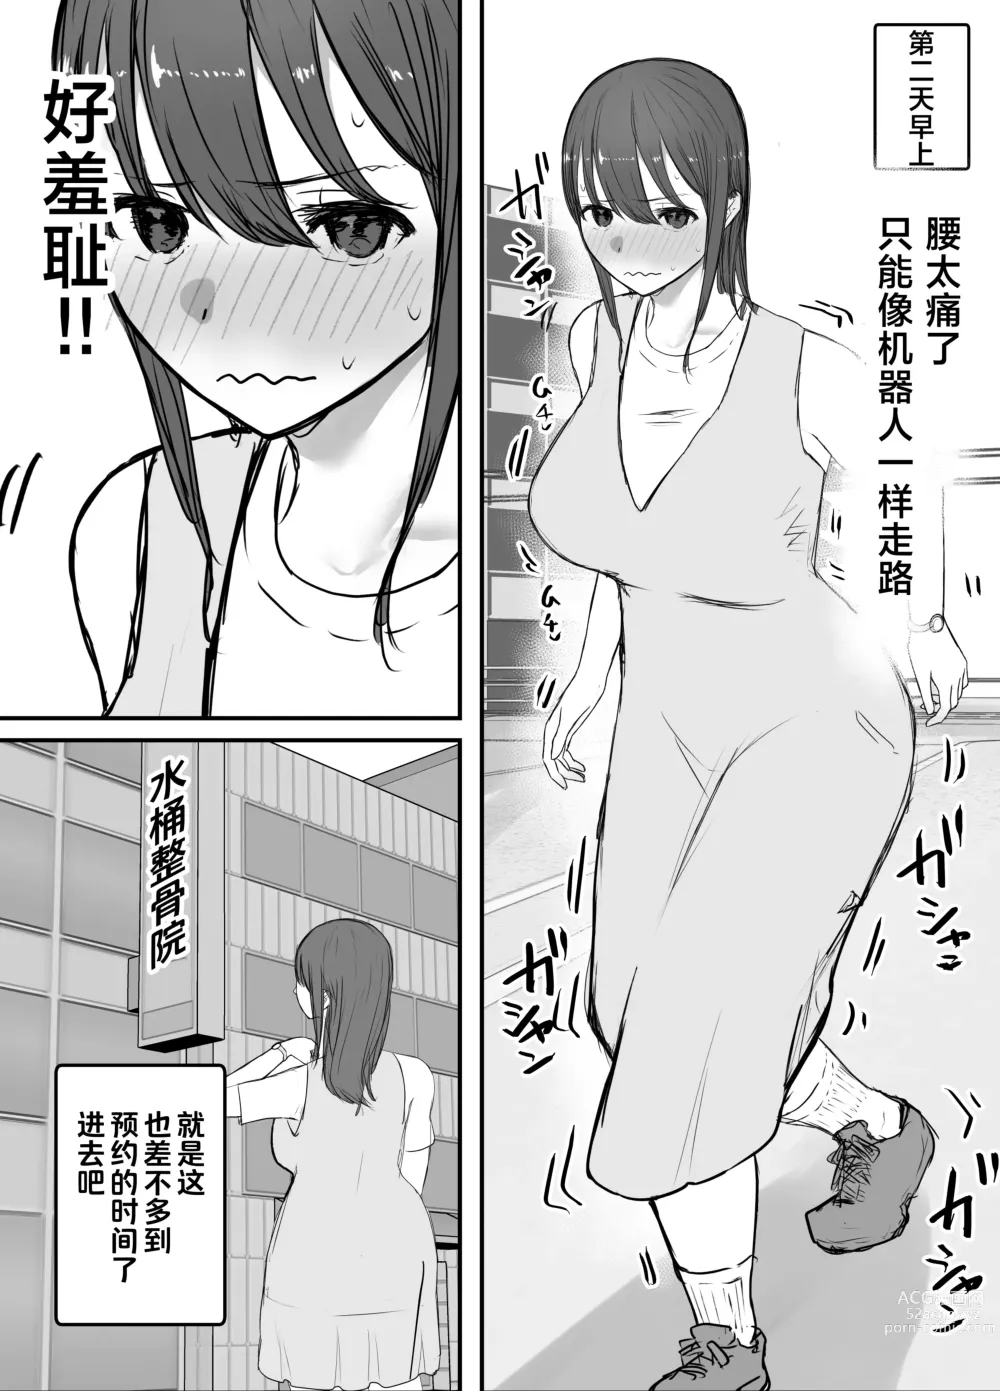 Page 24 of doujinshi 戴绿帽后悔似乎已经迟了哟?3